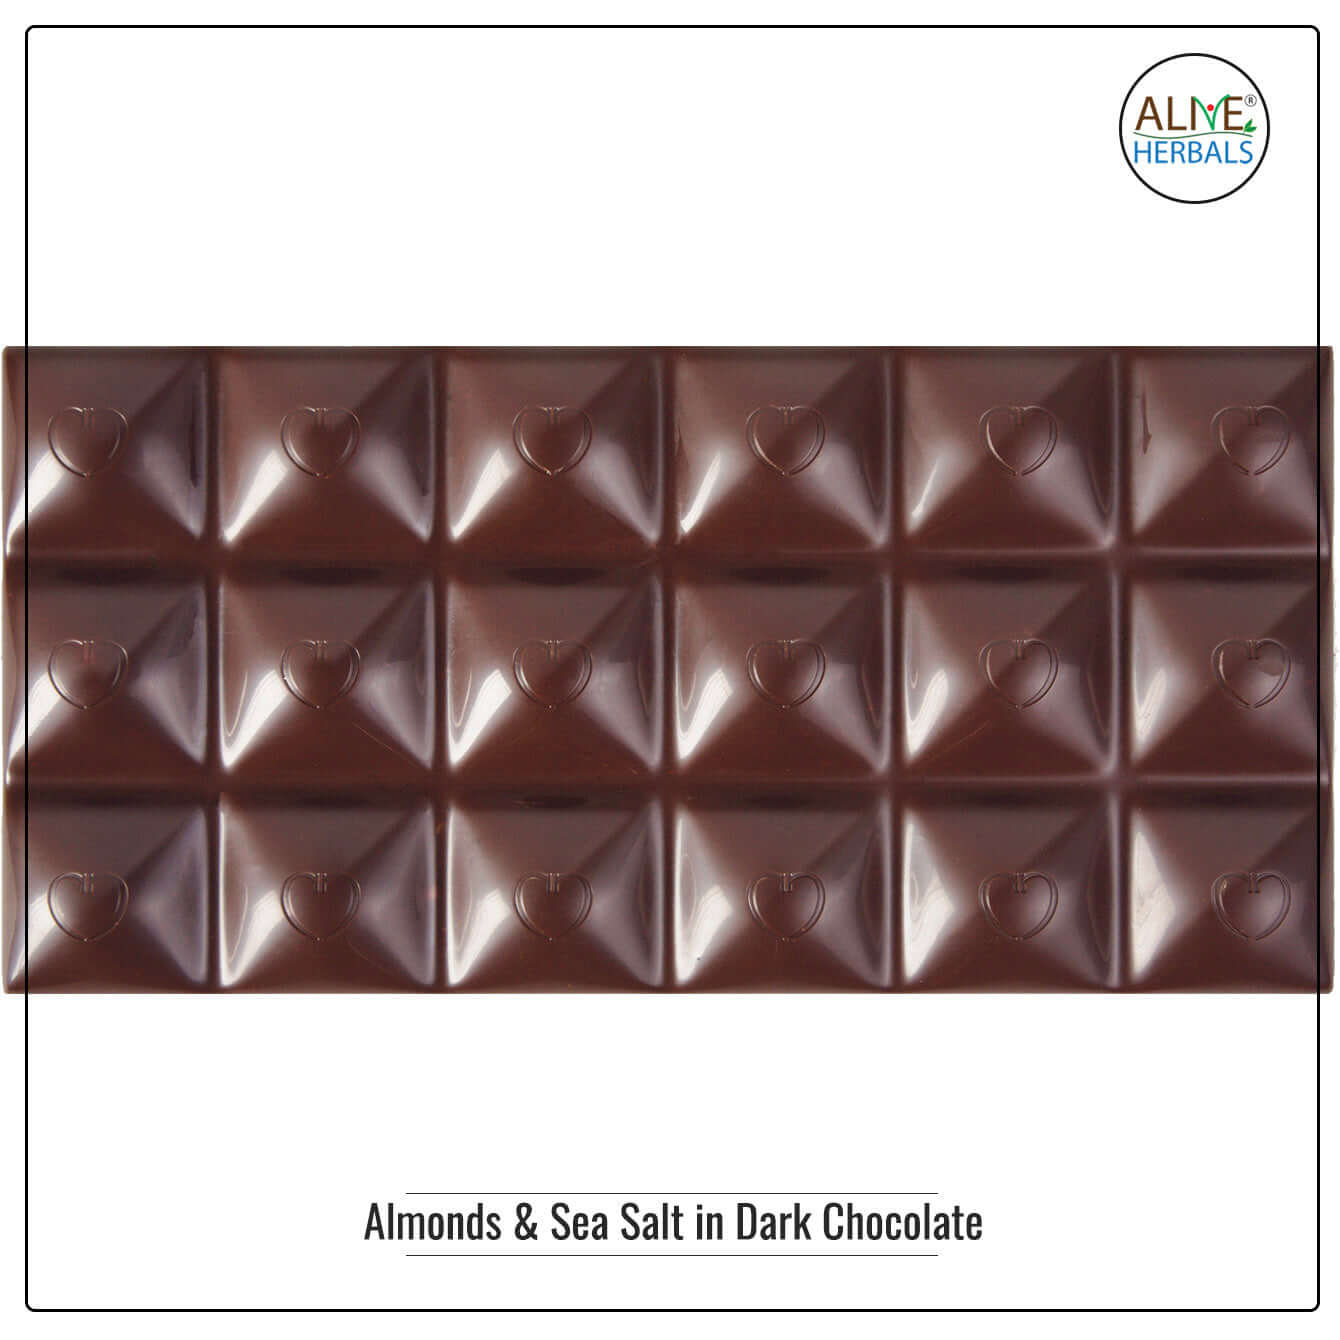 Almonds & Sea Salt in Dark Chocolate - Buy at Natural Food Store | Alive Herbals.